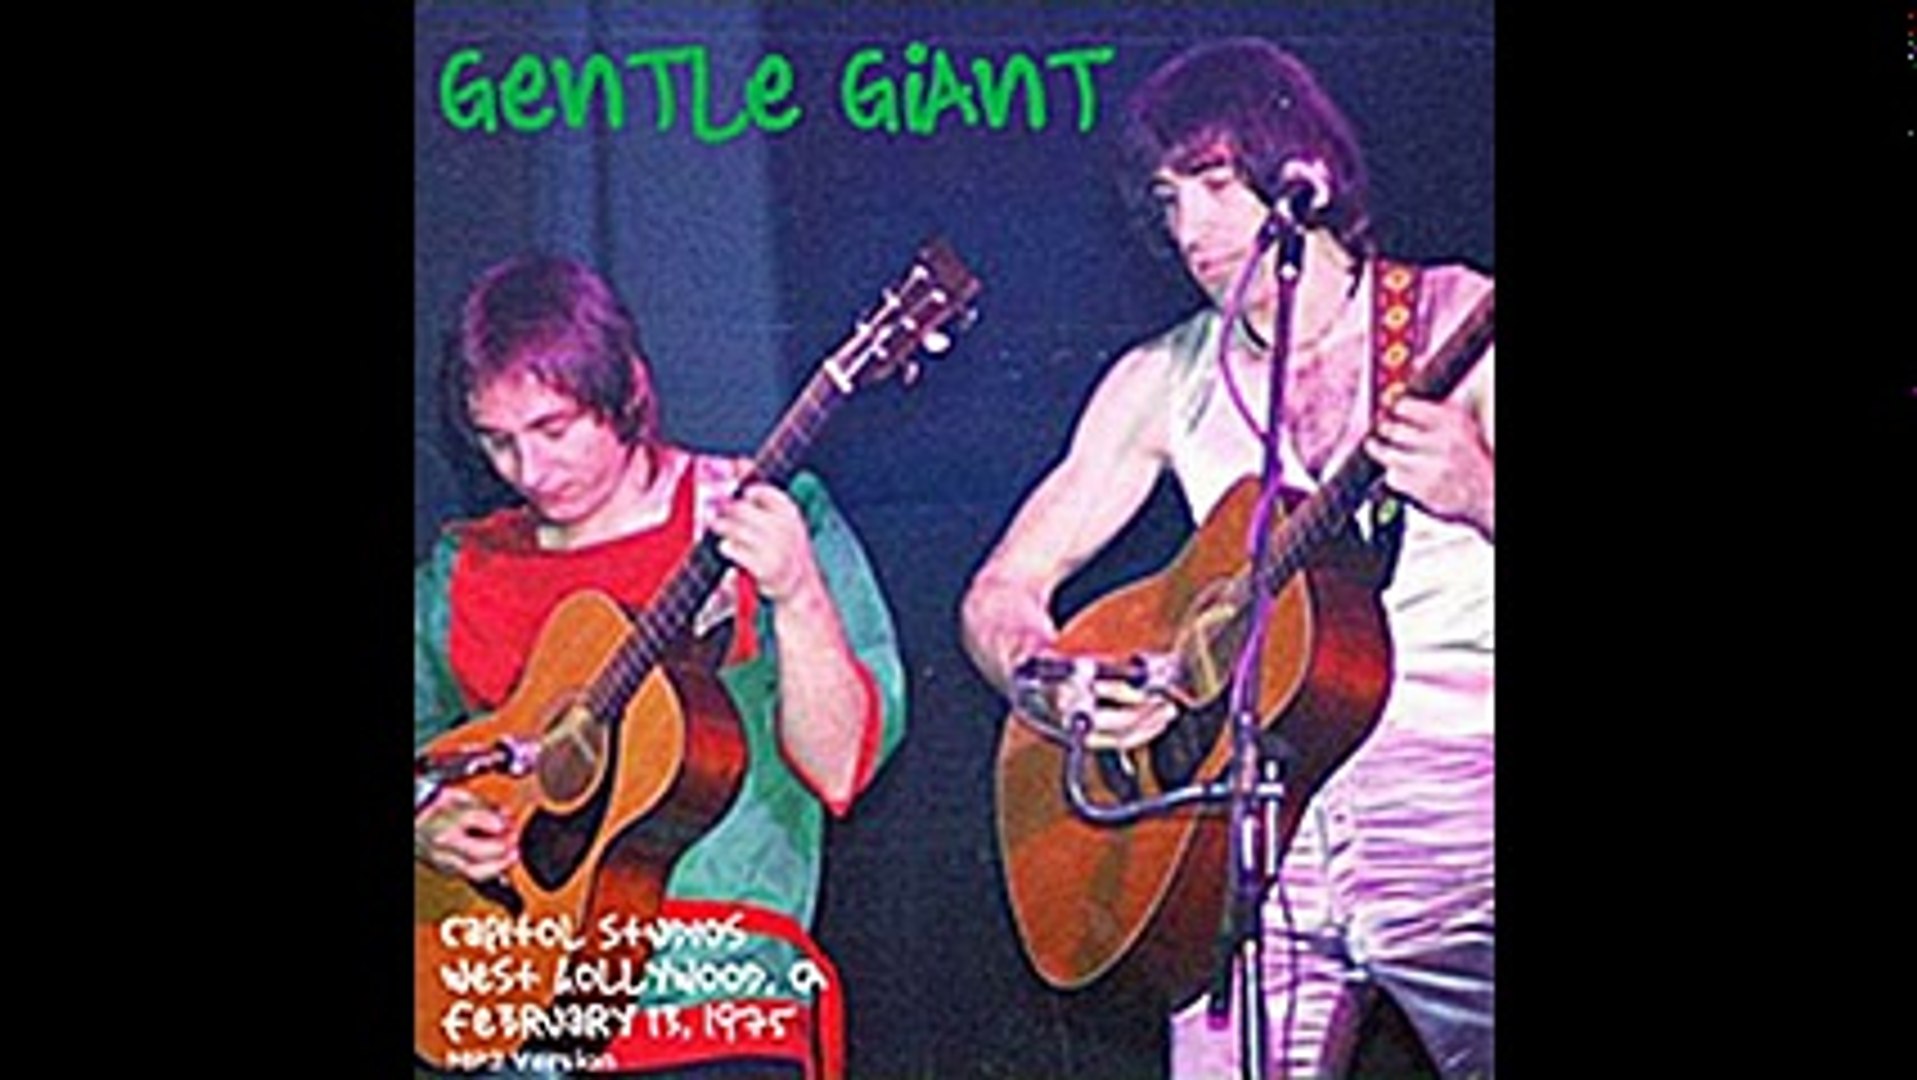 Gentle Giant - bootleg Capitol Studios,West Hollywood,02-13-1975